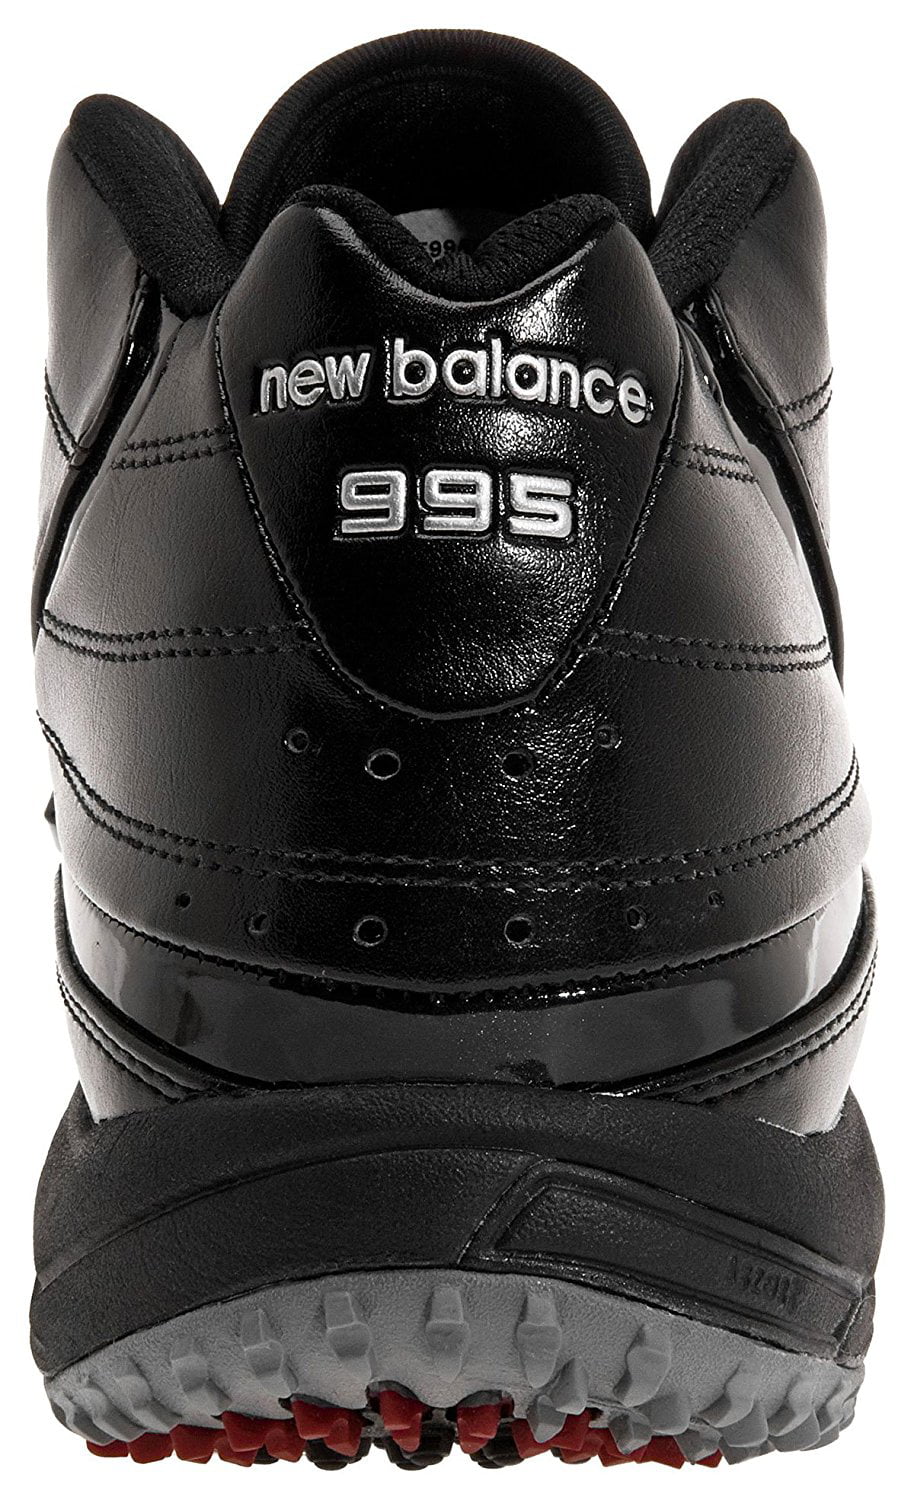 new balance 995 turf shoe